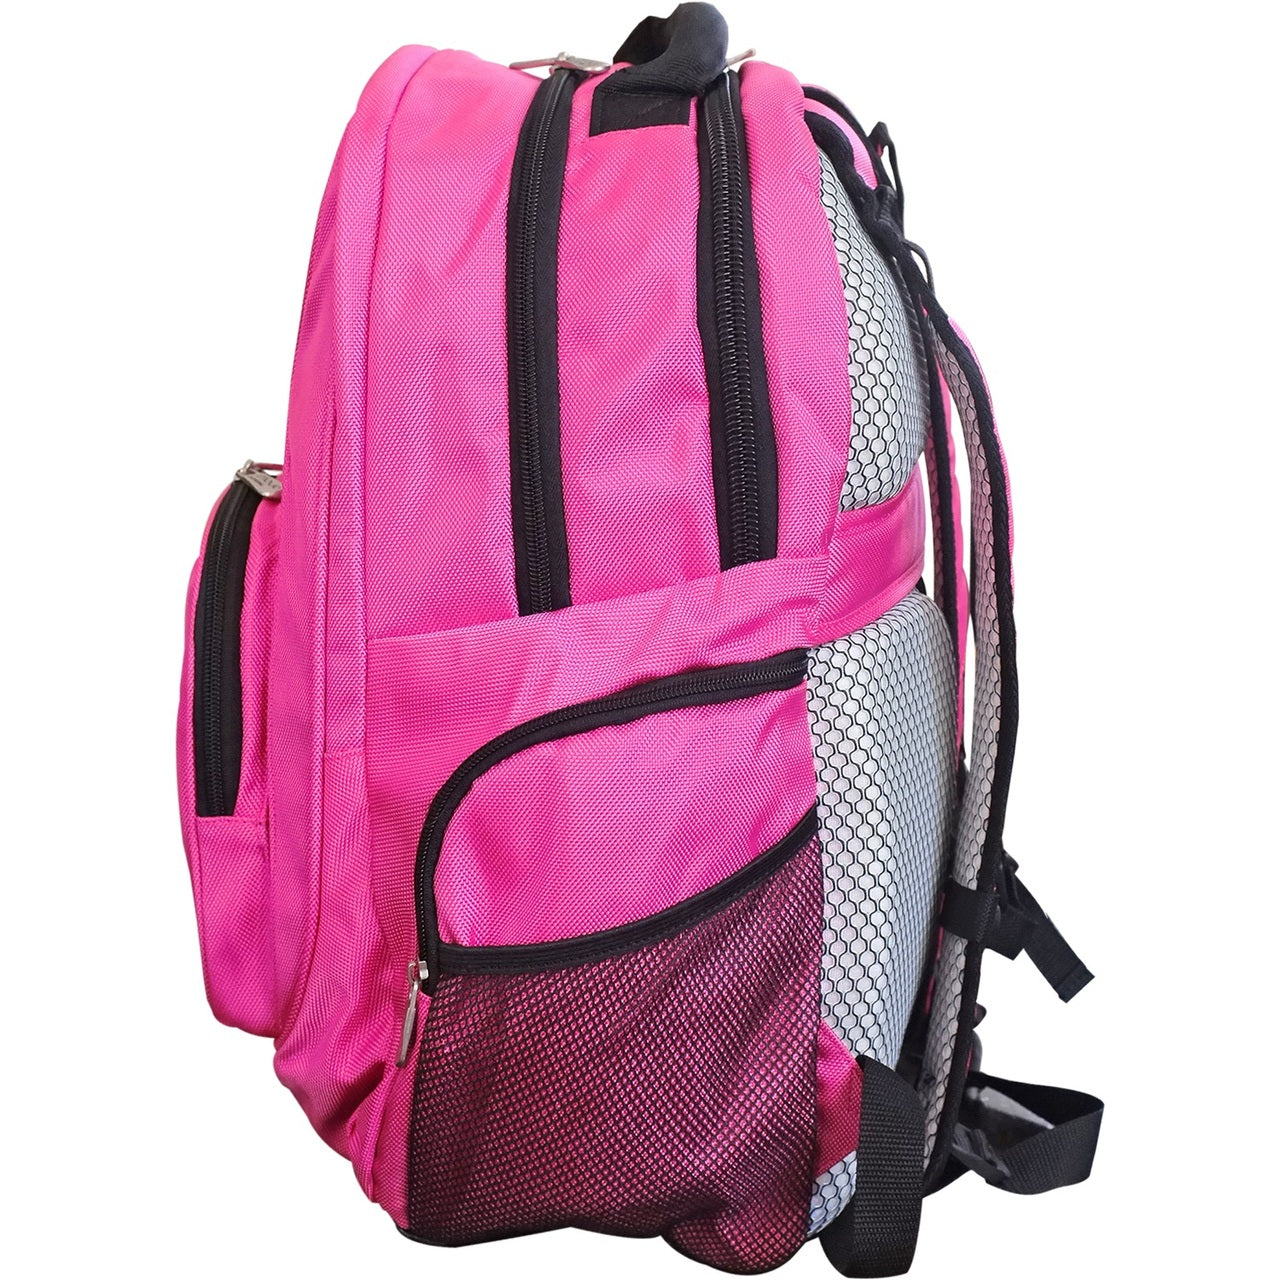 Bears Backpack | Chicago Bears Laptop Backpack- Pink